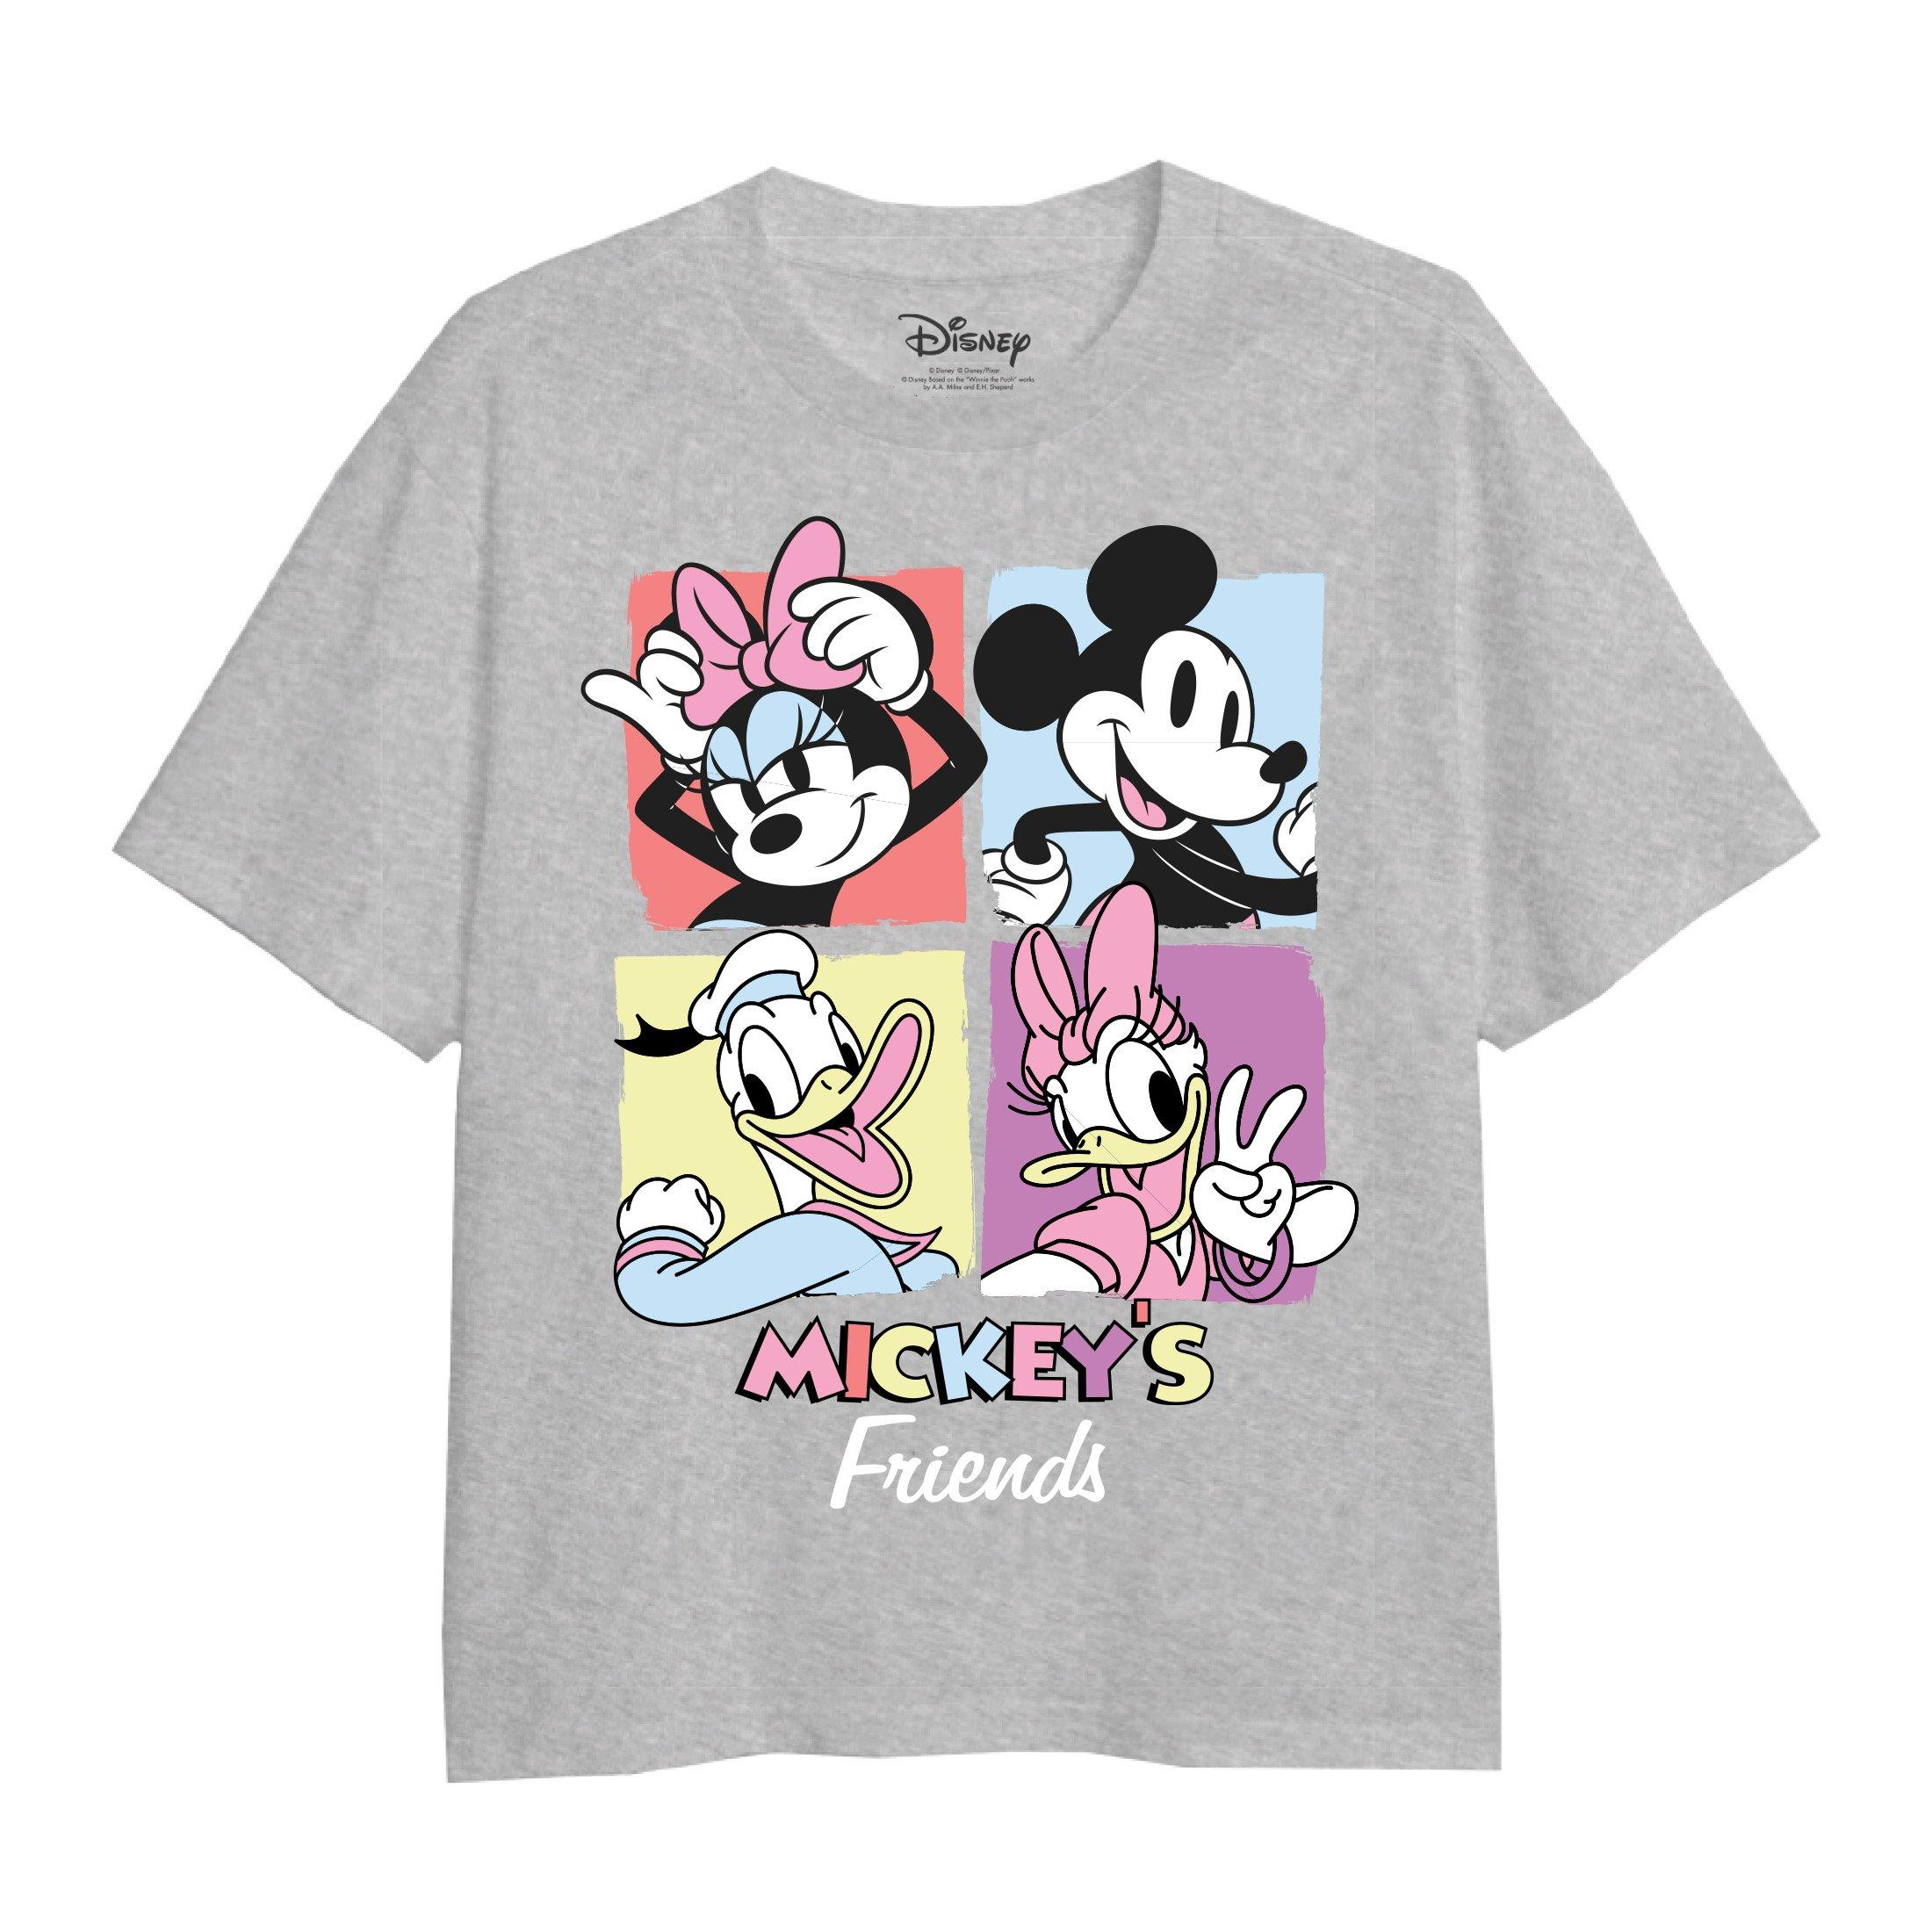 Футболка с квадратами «Микки Маус Друг» Disney, серый футболка в ребруску с микки и минни маус disney zara красный